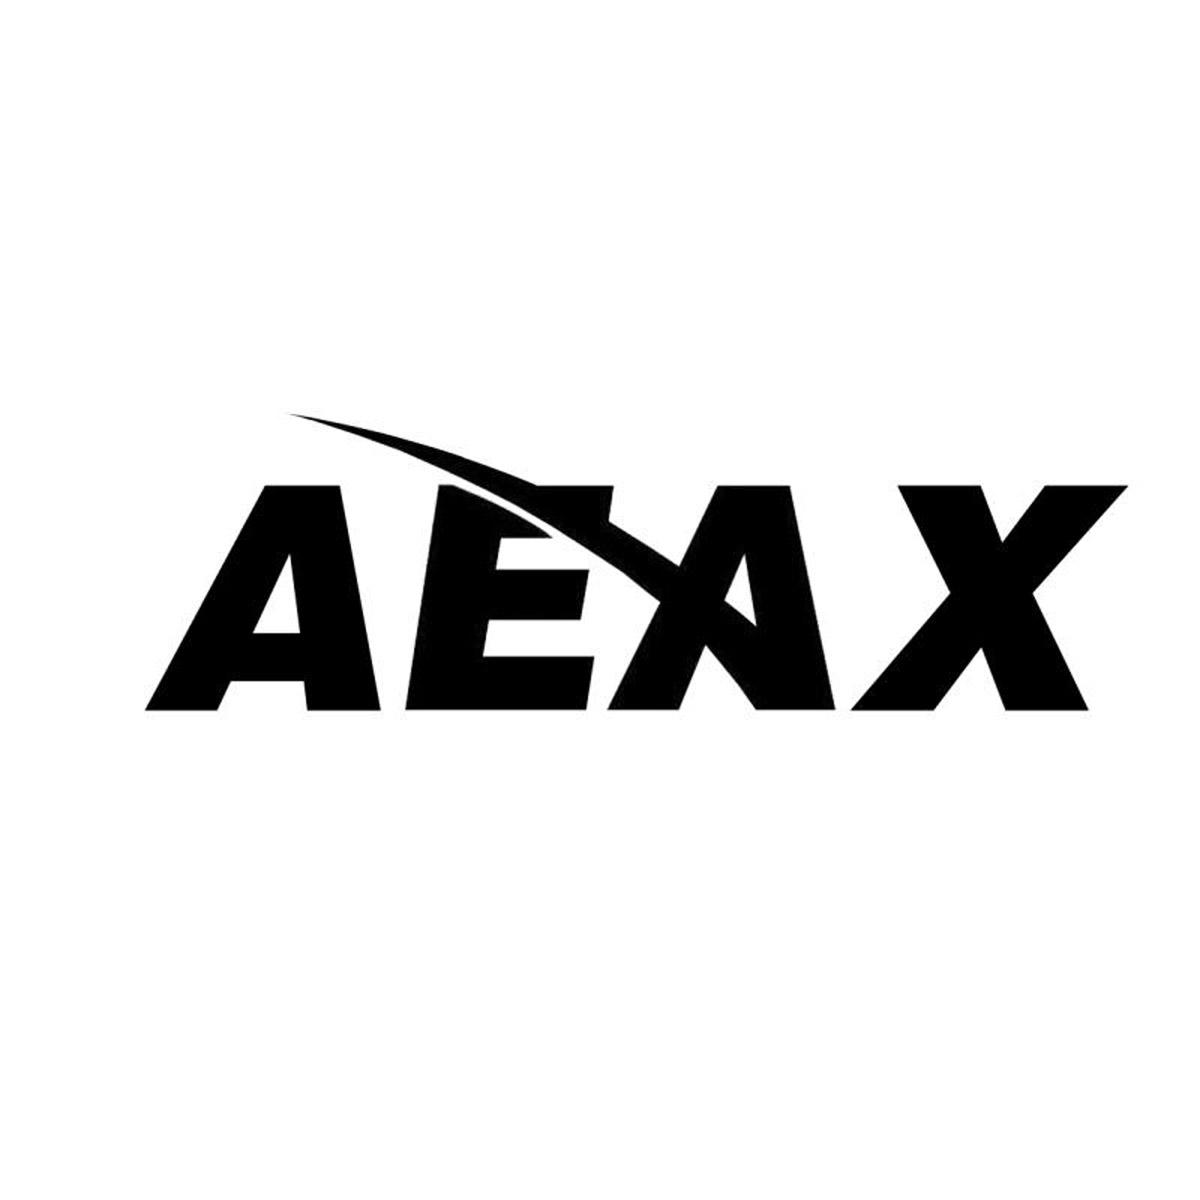 AEAX头盔商标转让费用买卖交易流程